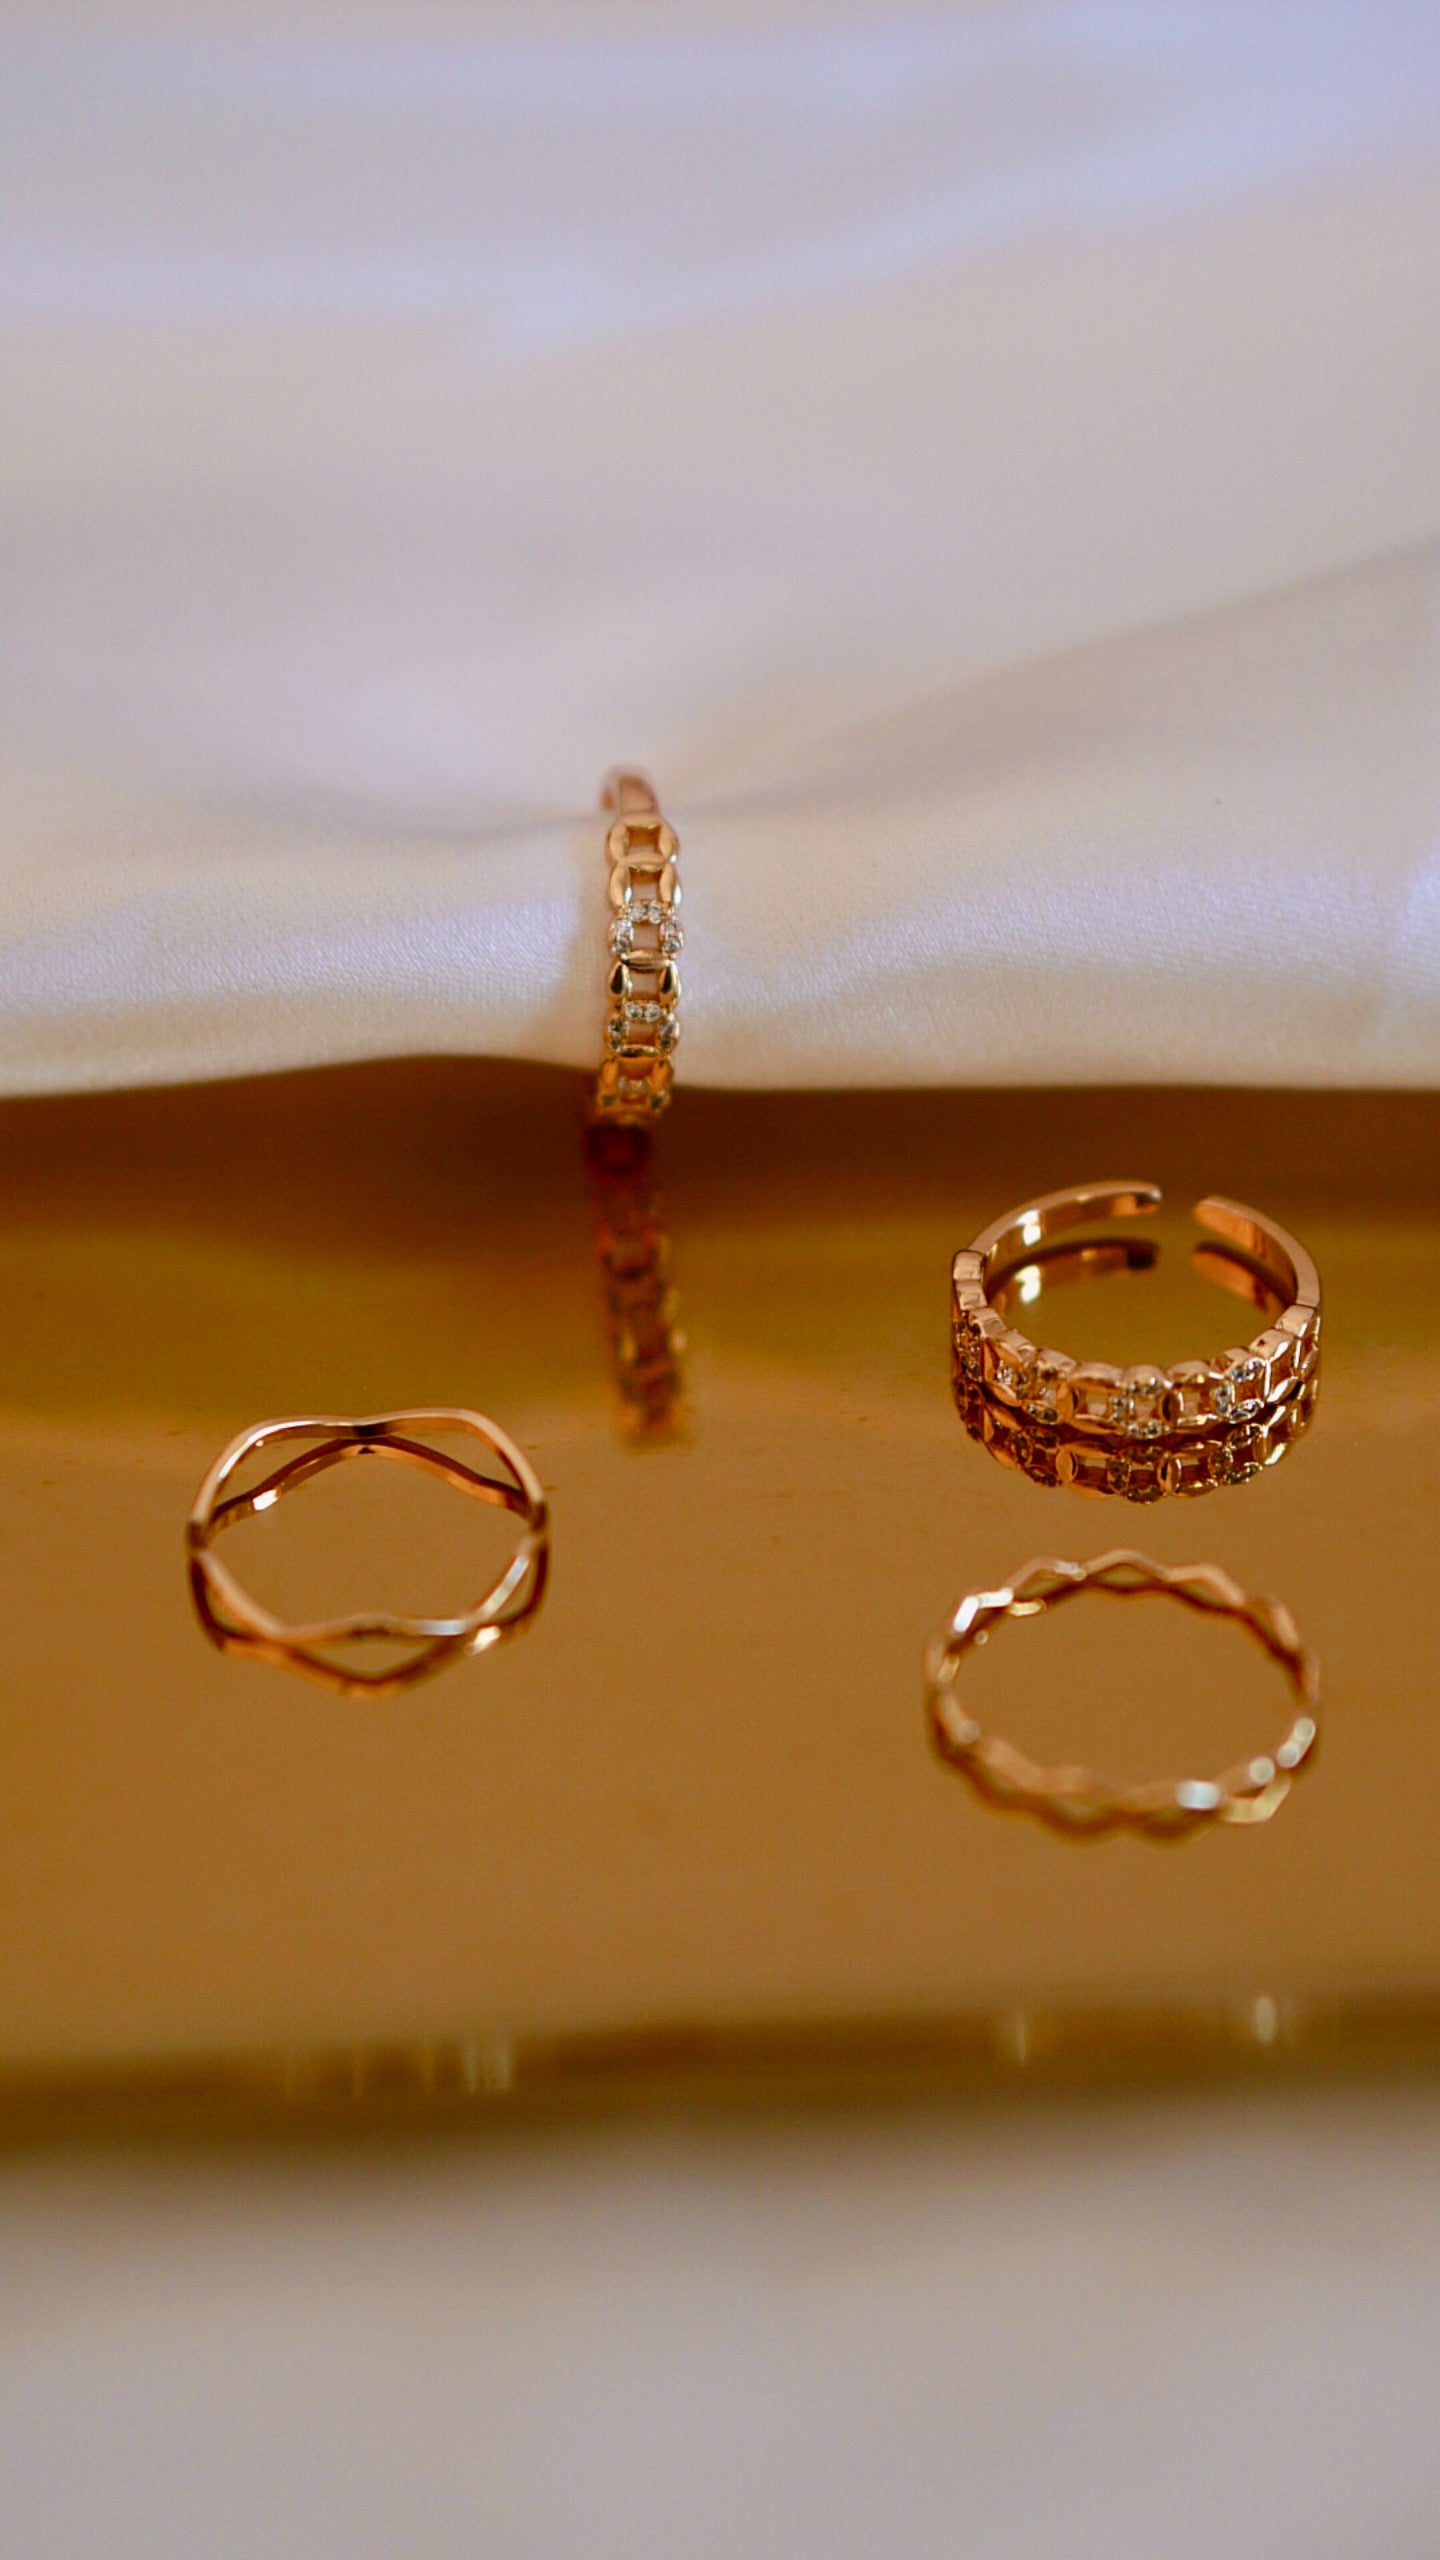 Chain ring charm